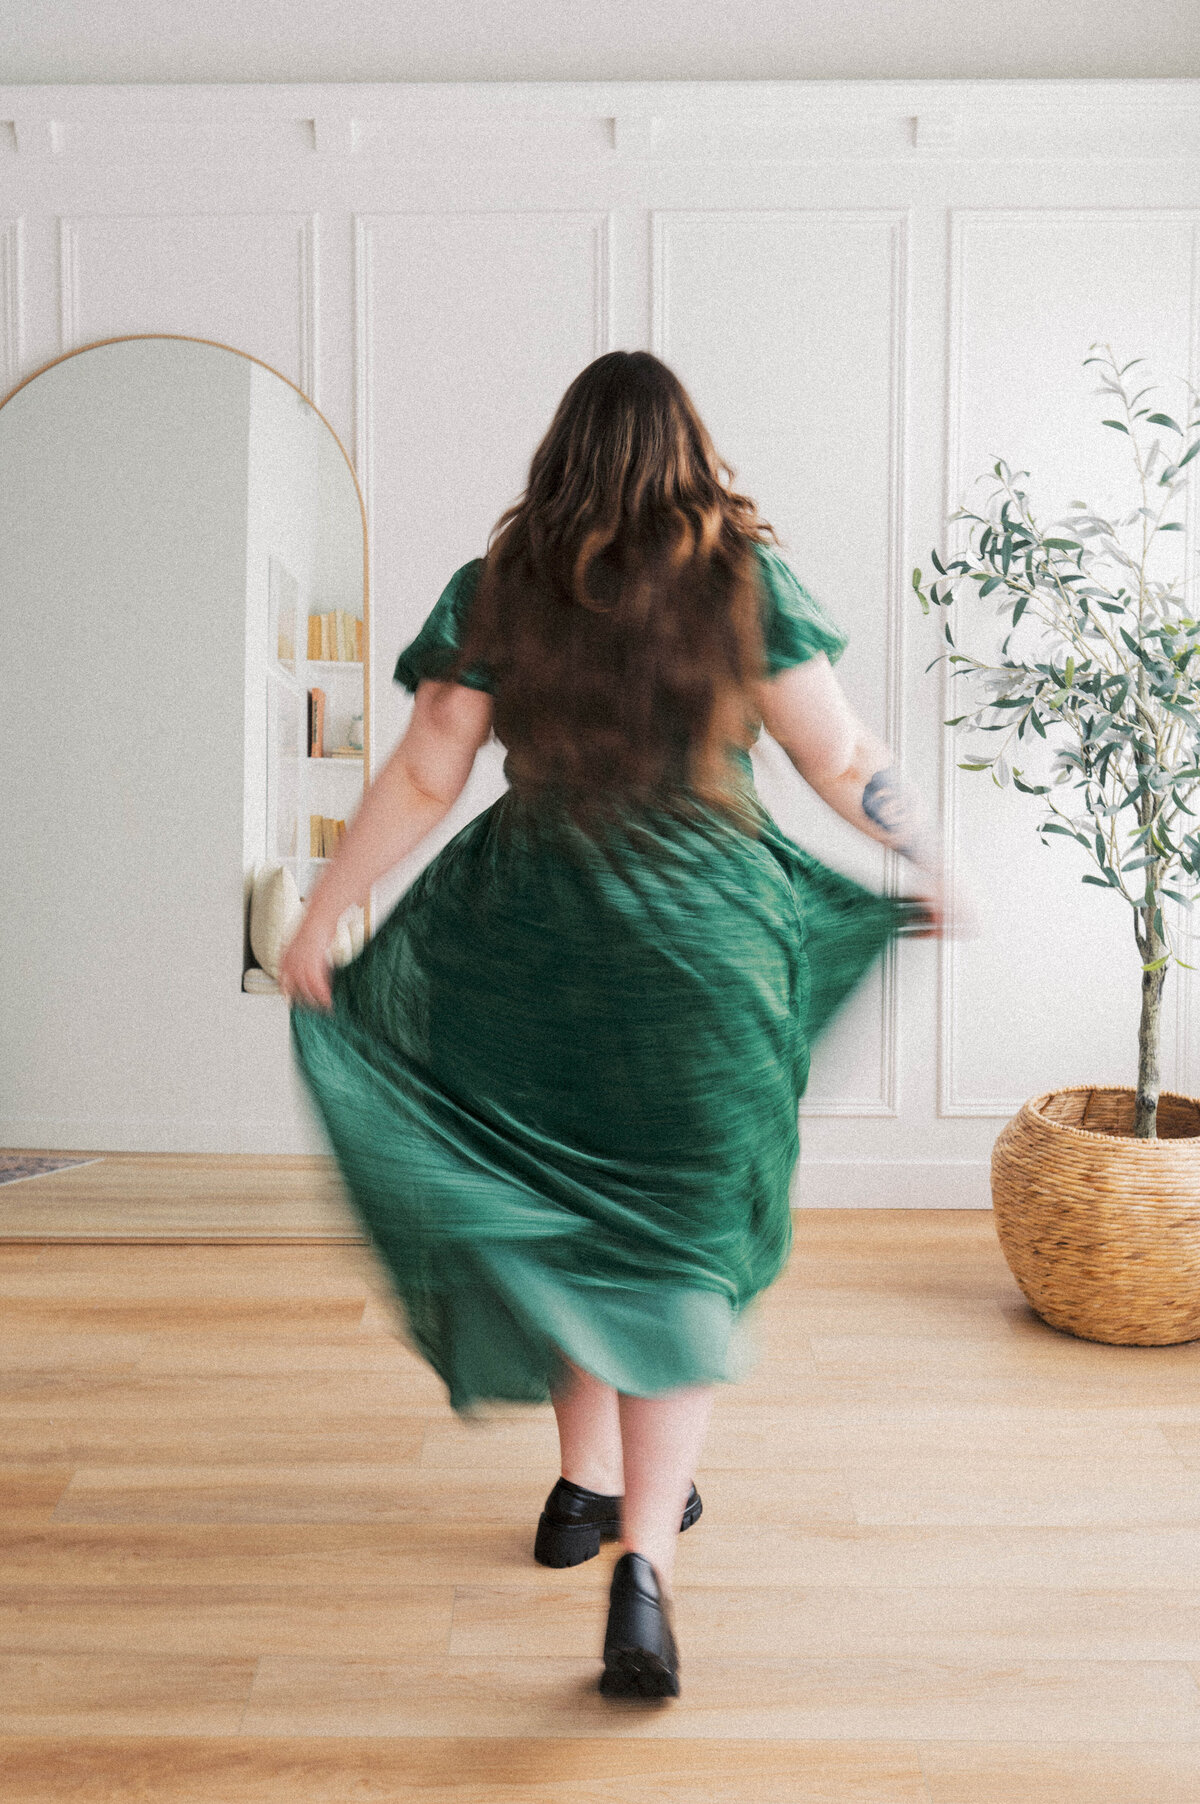 Blurry image of woman wearing green dress walking away towards while wall